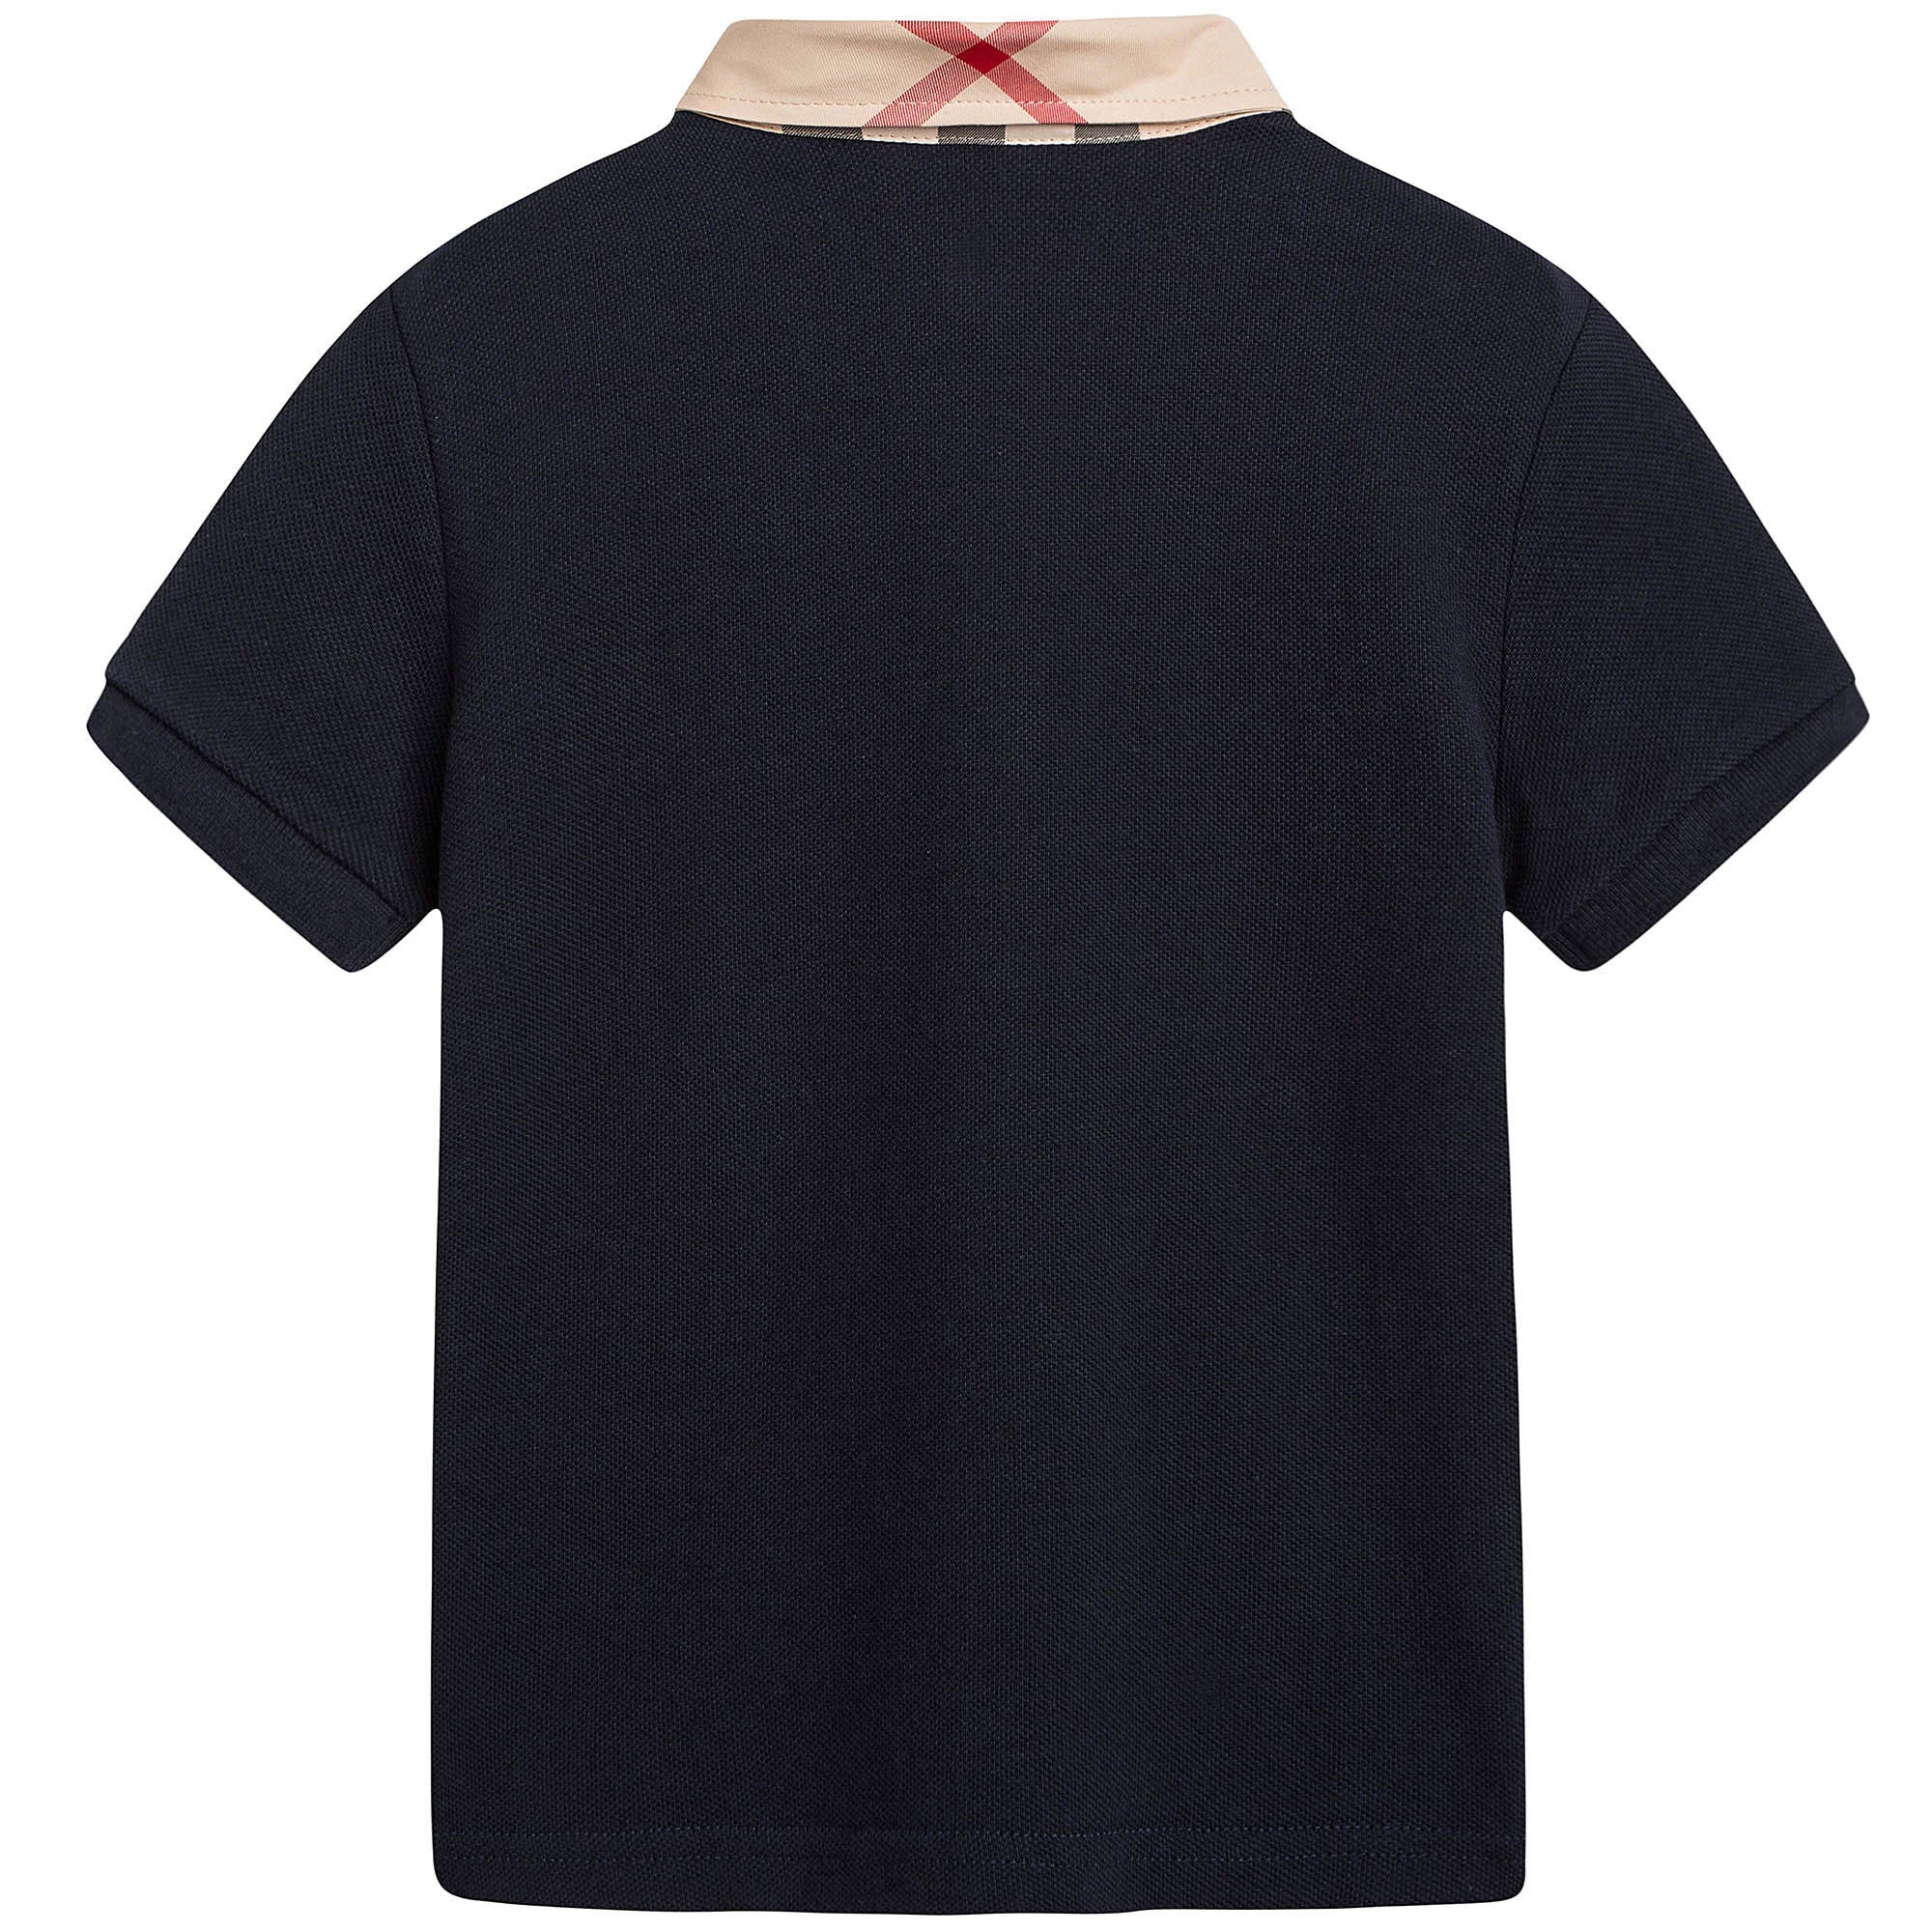 Boys Navy Blue Polo Shirt With Classic Check Collar